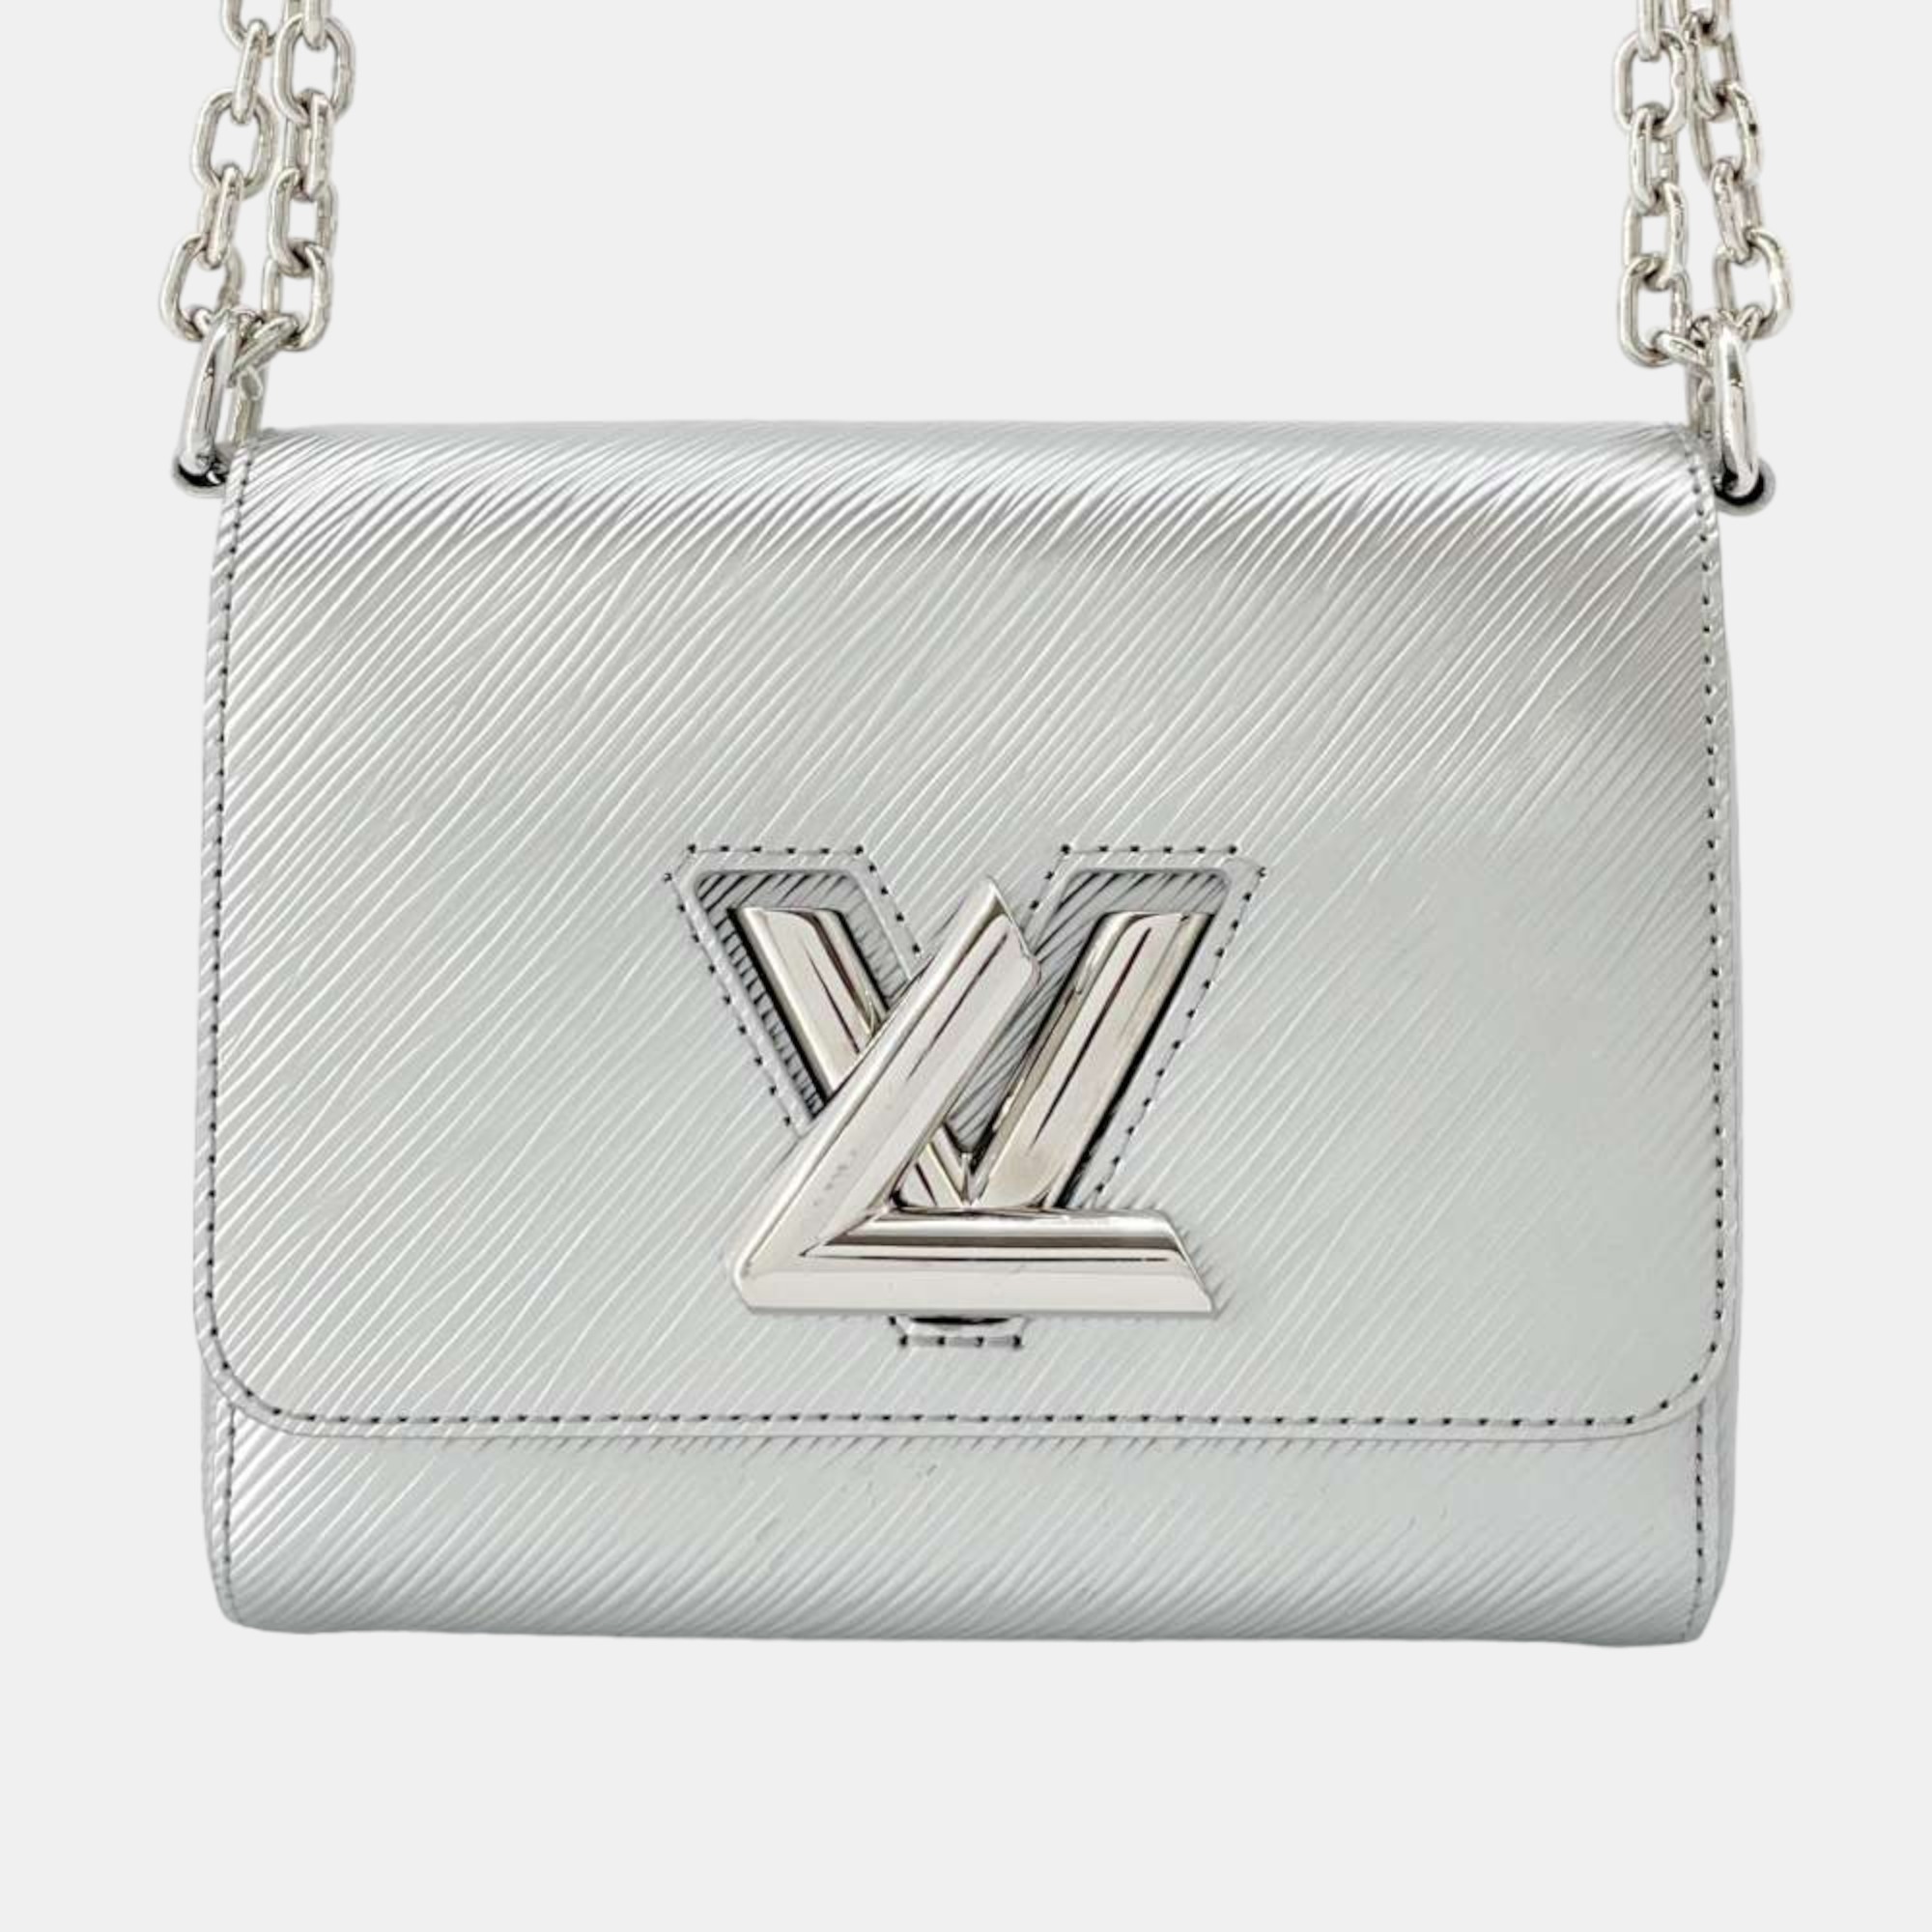 Louis vuitton metallic silver leather small pm shoulder bag